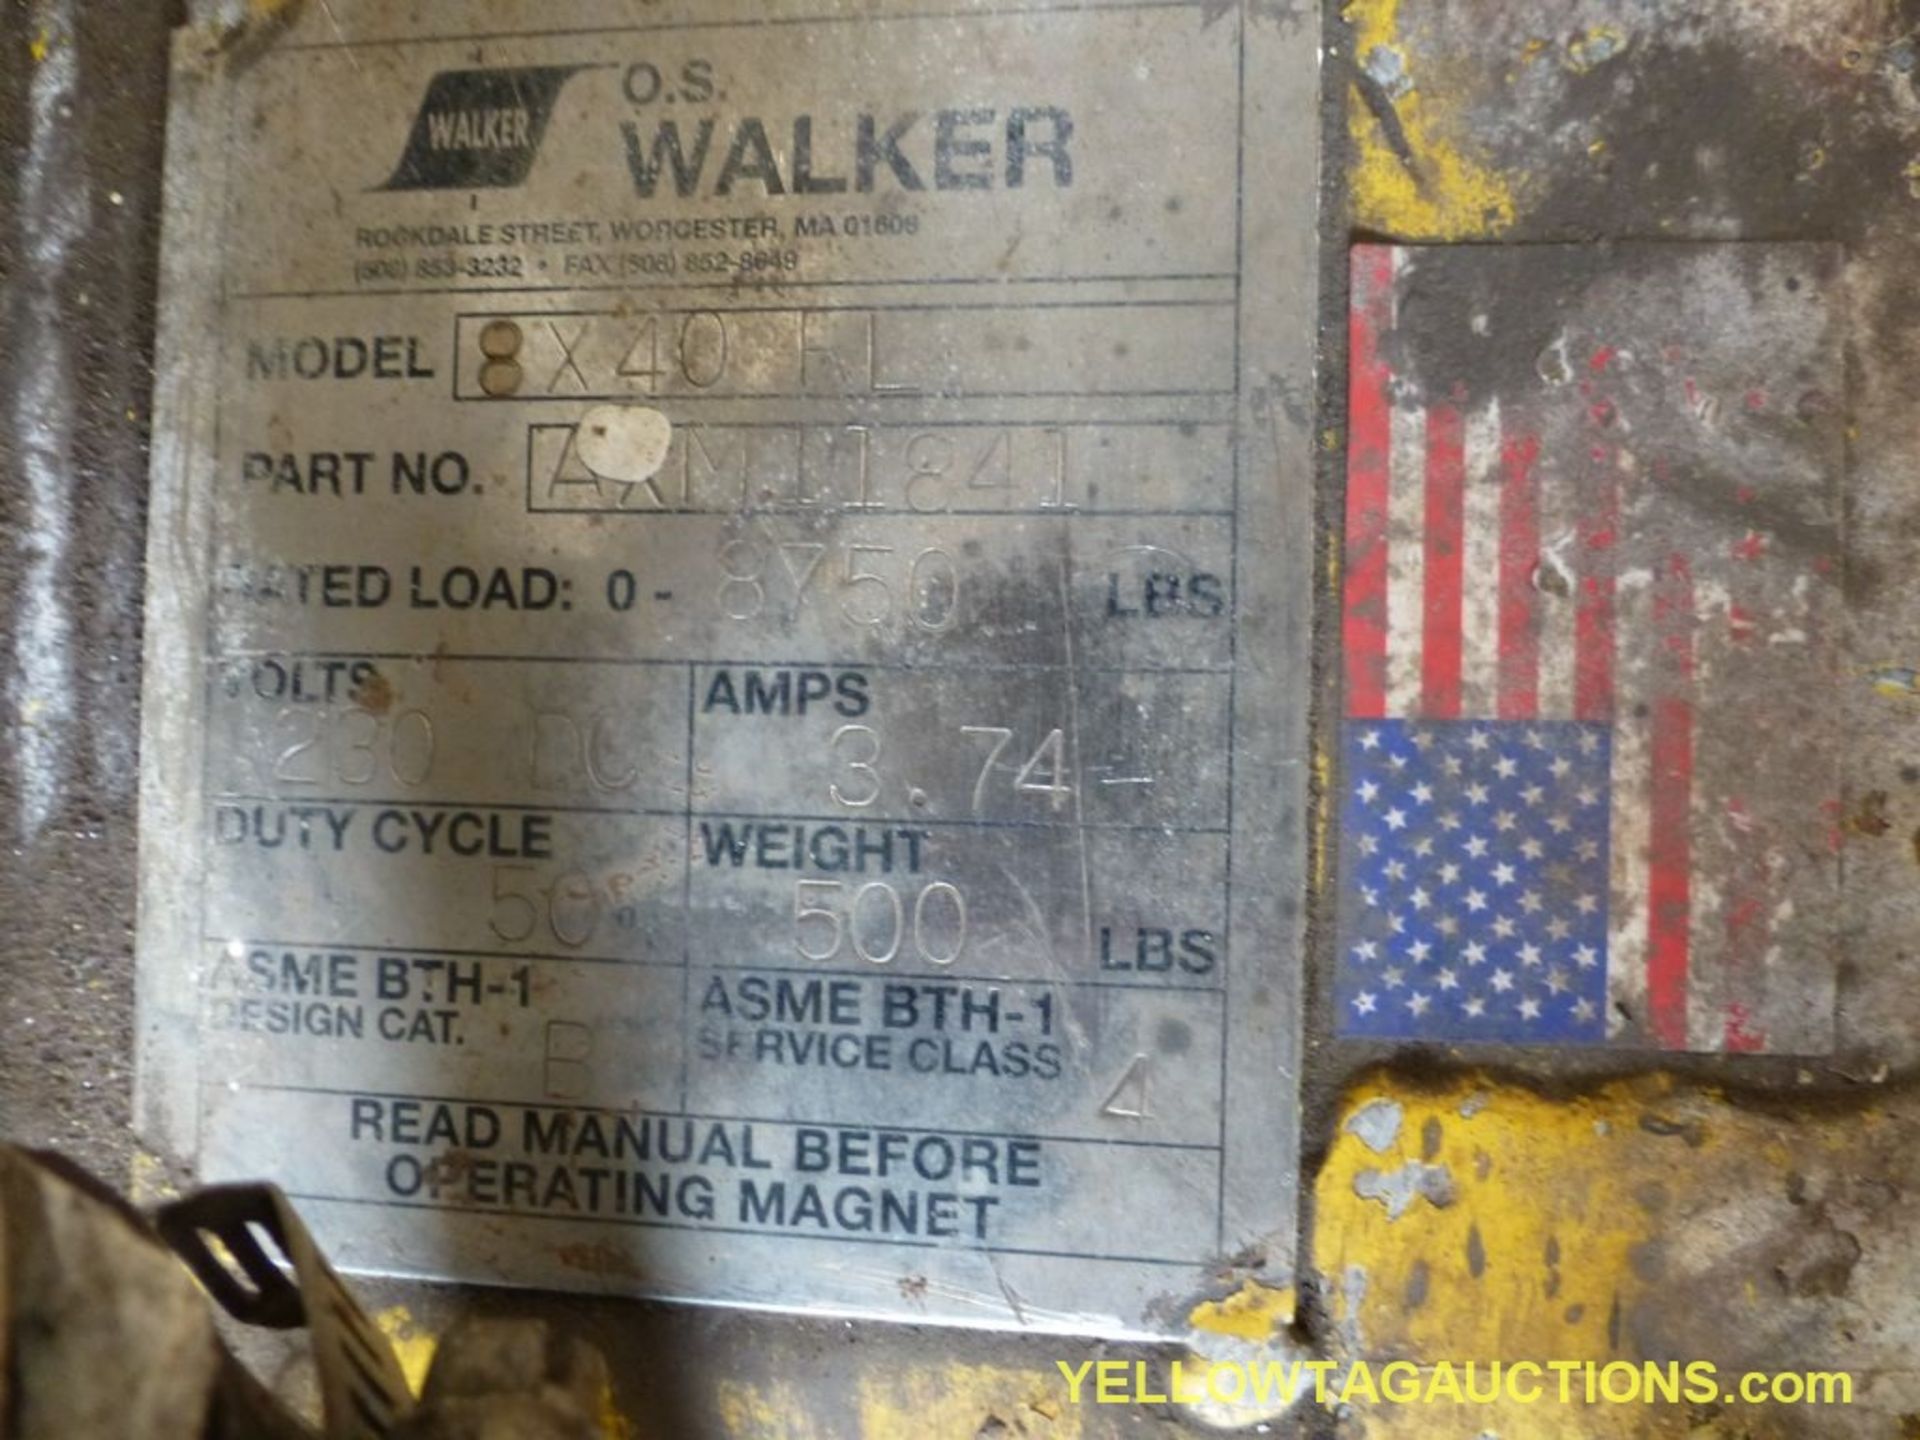 Walker Magnetics Lifting Magnet | Model No. 8X40 HL; Rated Load: 8750 lbs; 230 VDC; 3.74A - Image 4 of 4